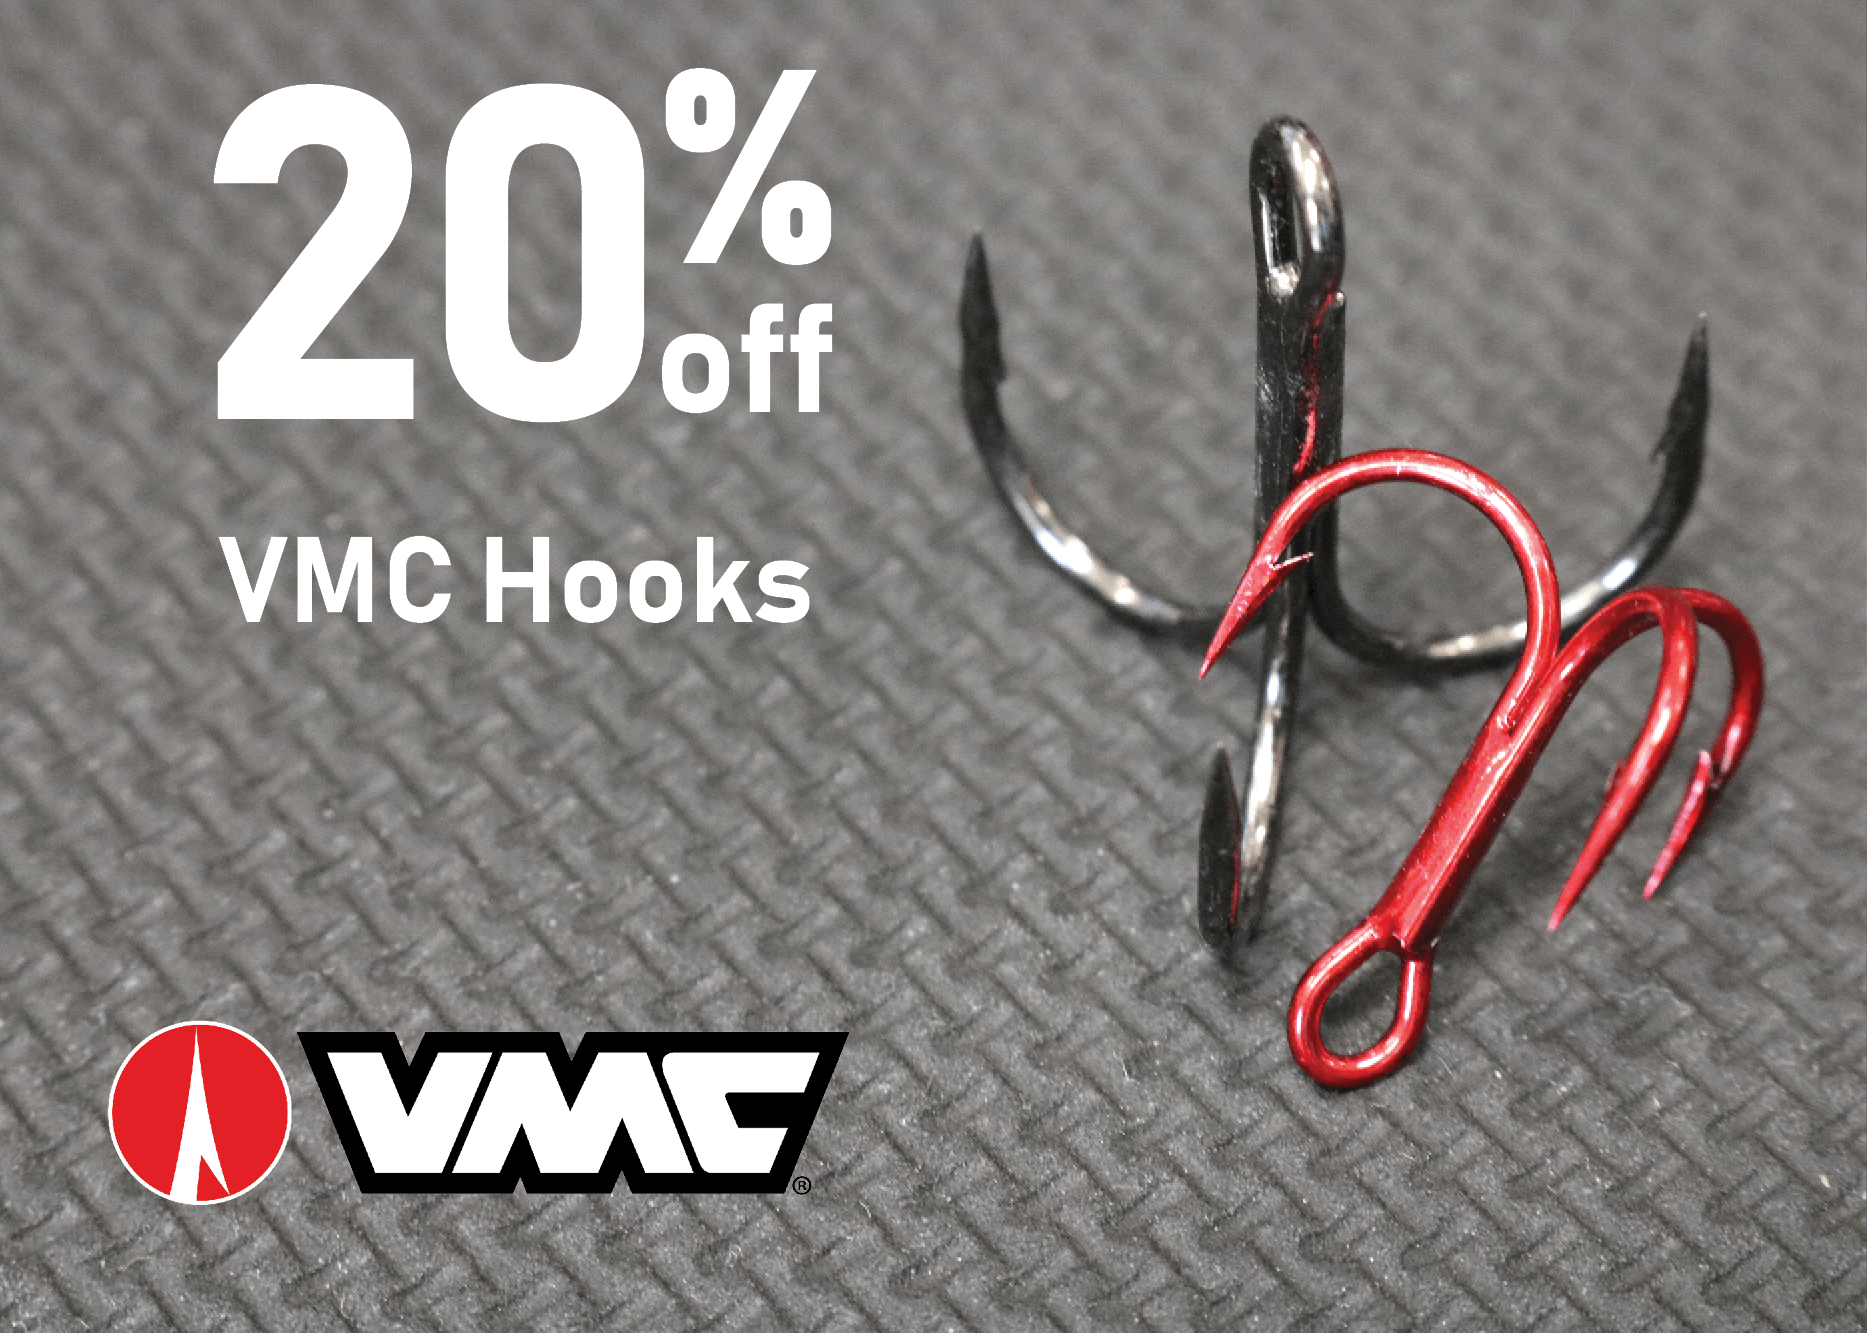 Save 20% on VMC Hooks